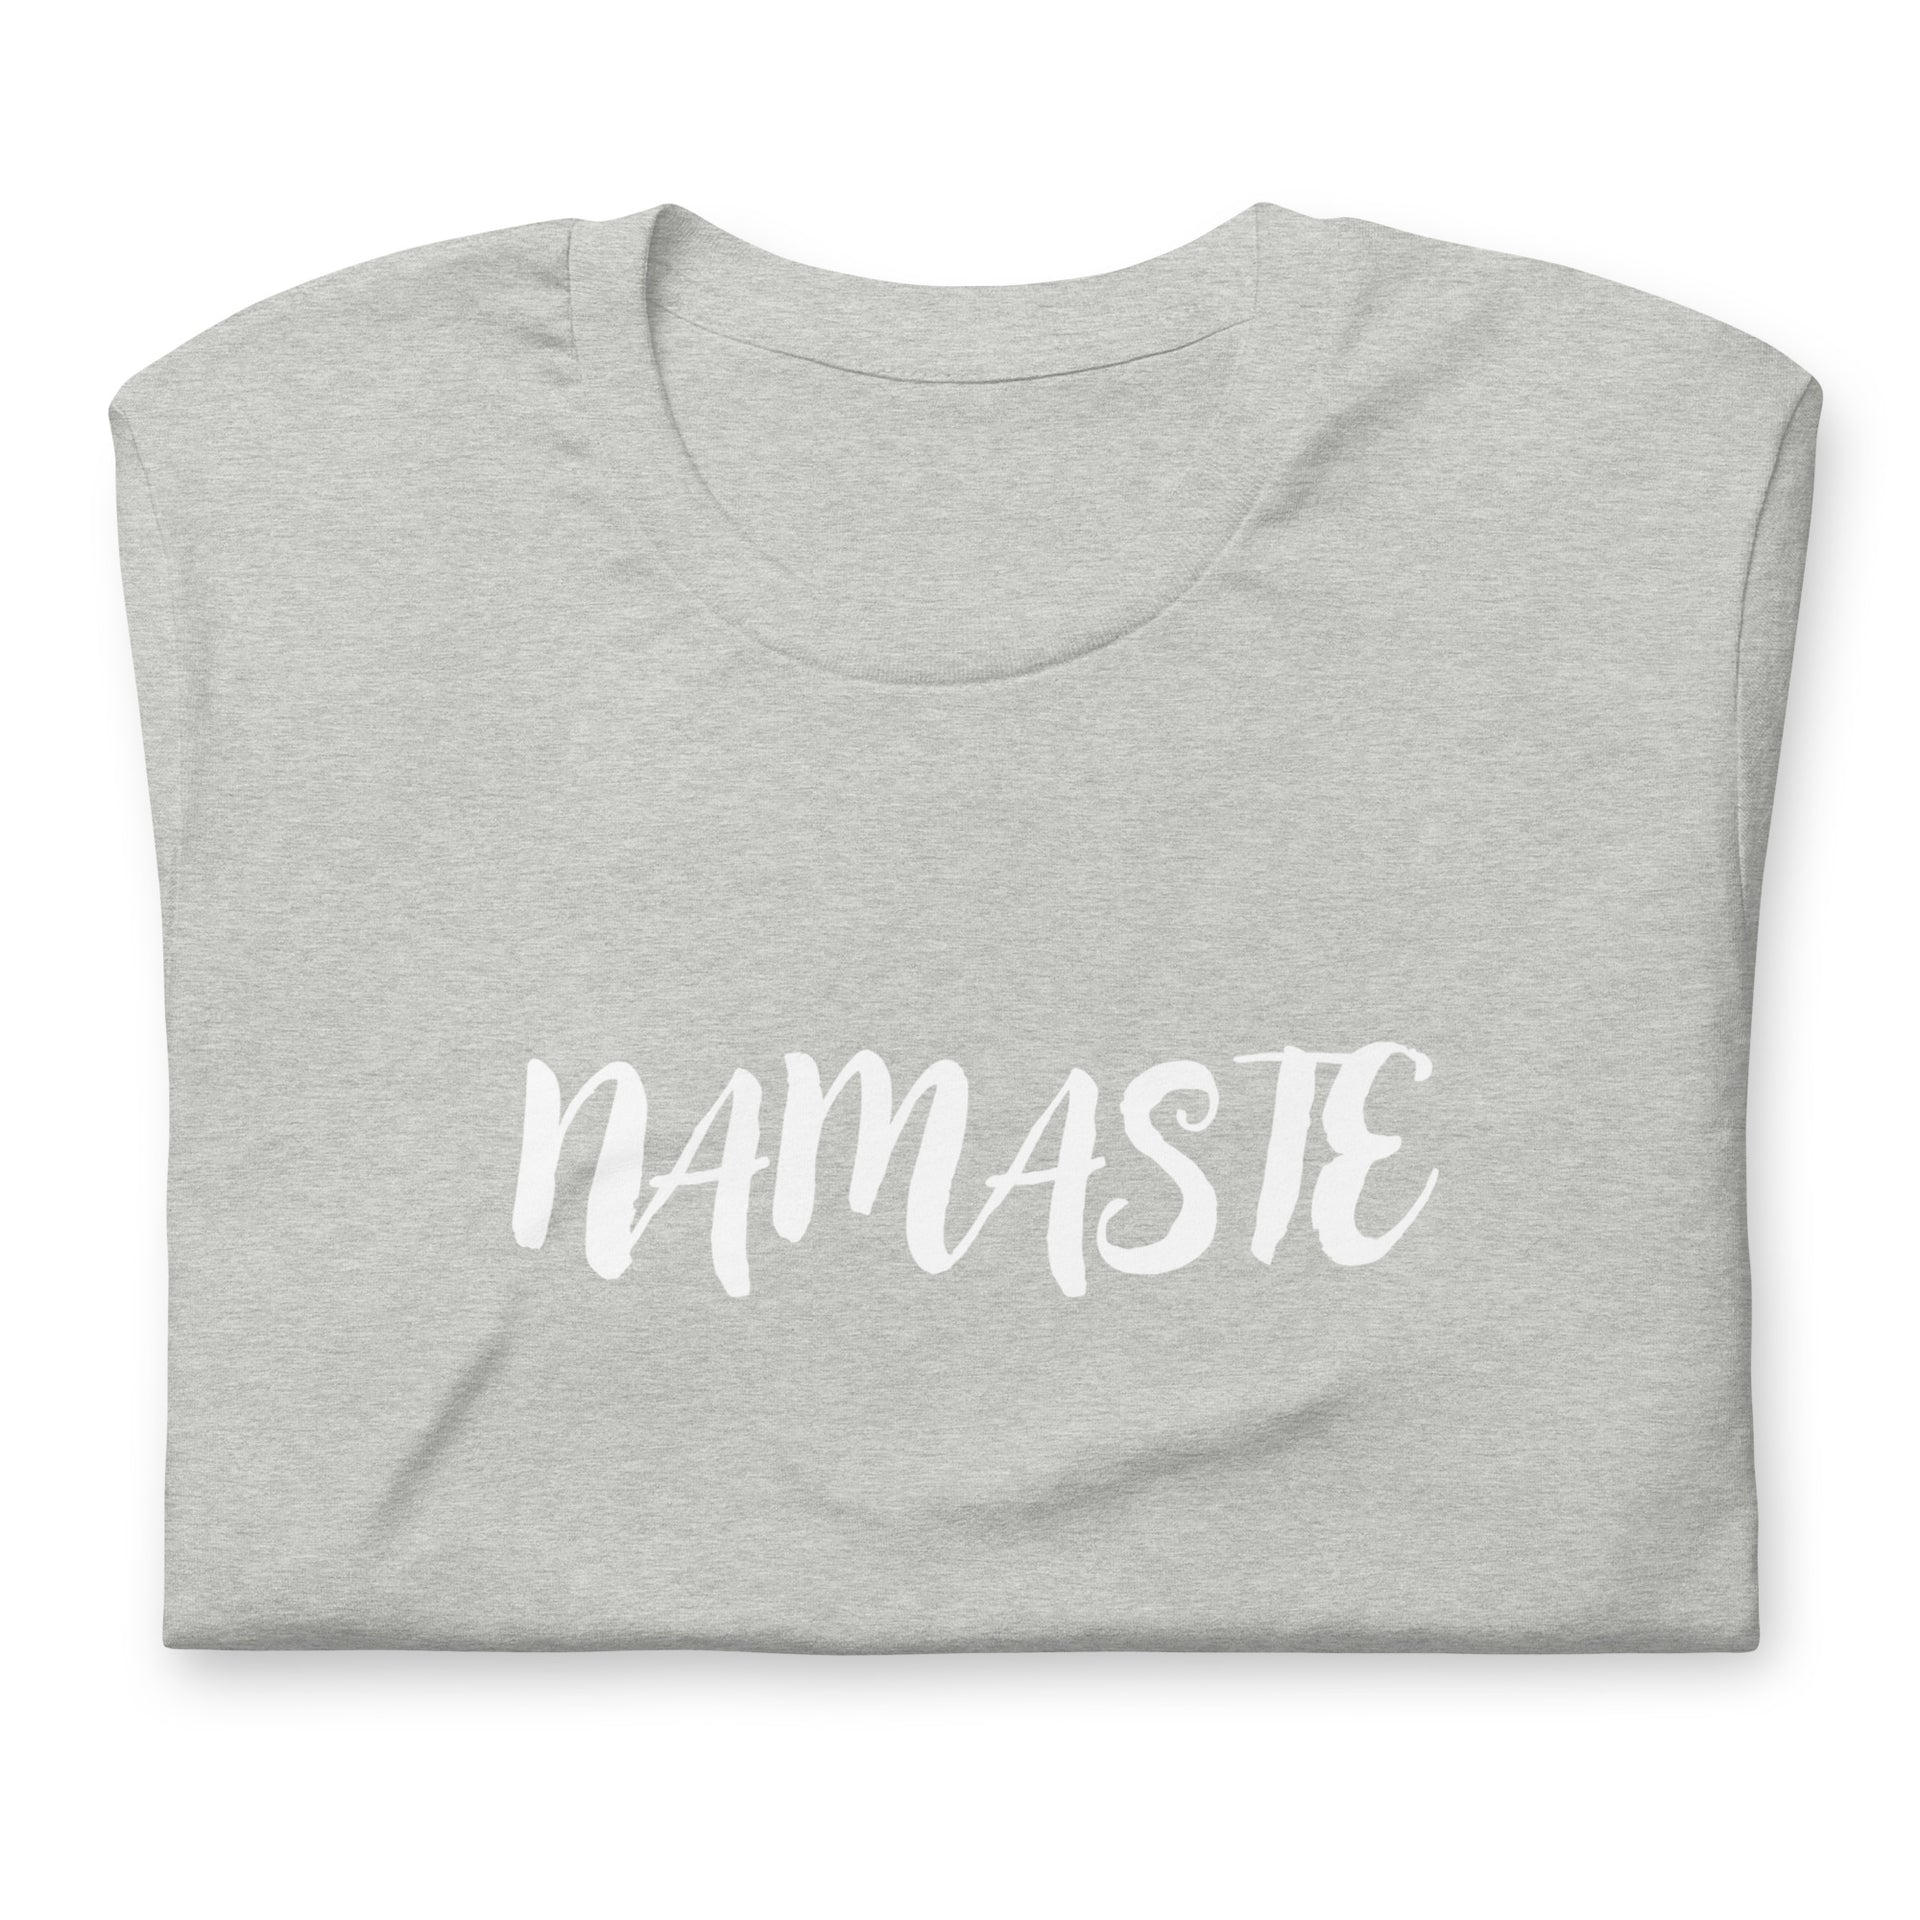 Yoga Meaning Shirt, Meditation T Shirt, Relax Shirt for Unisex, Namaste,  Yoga T Shirt, Men Yoga Shirt, Women Yoga Shirt, Namaste T Shirt, Zen shirt  Poster for Sale by Wealthdesign